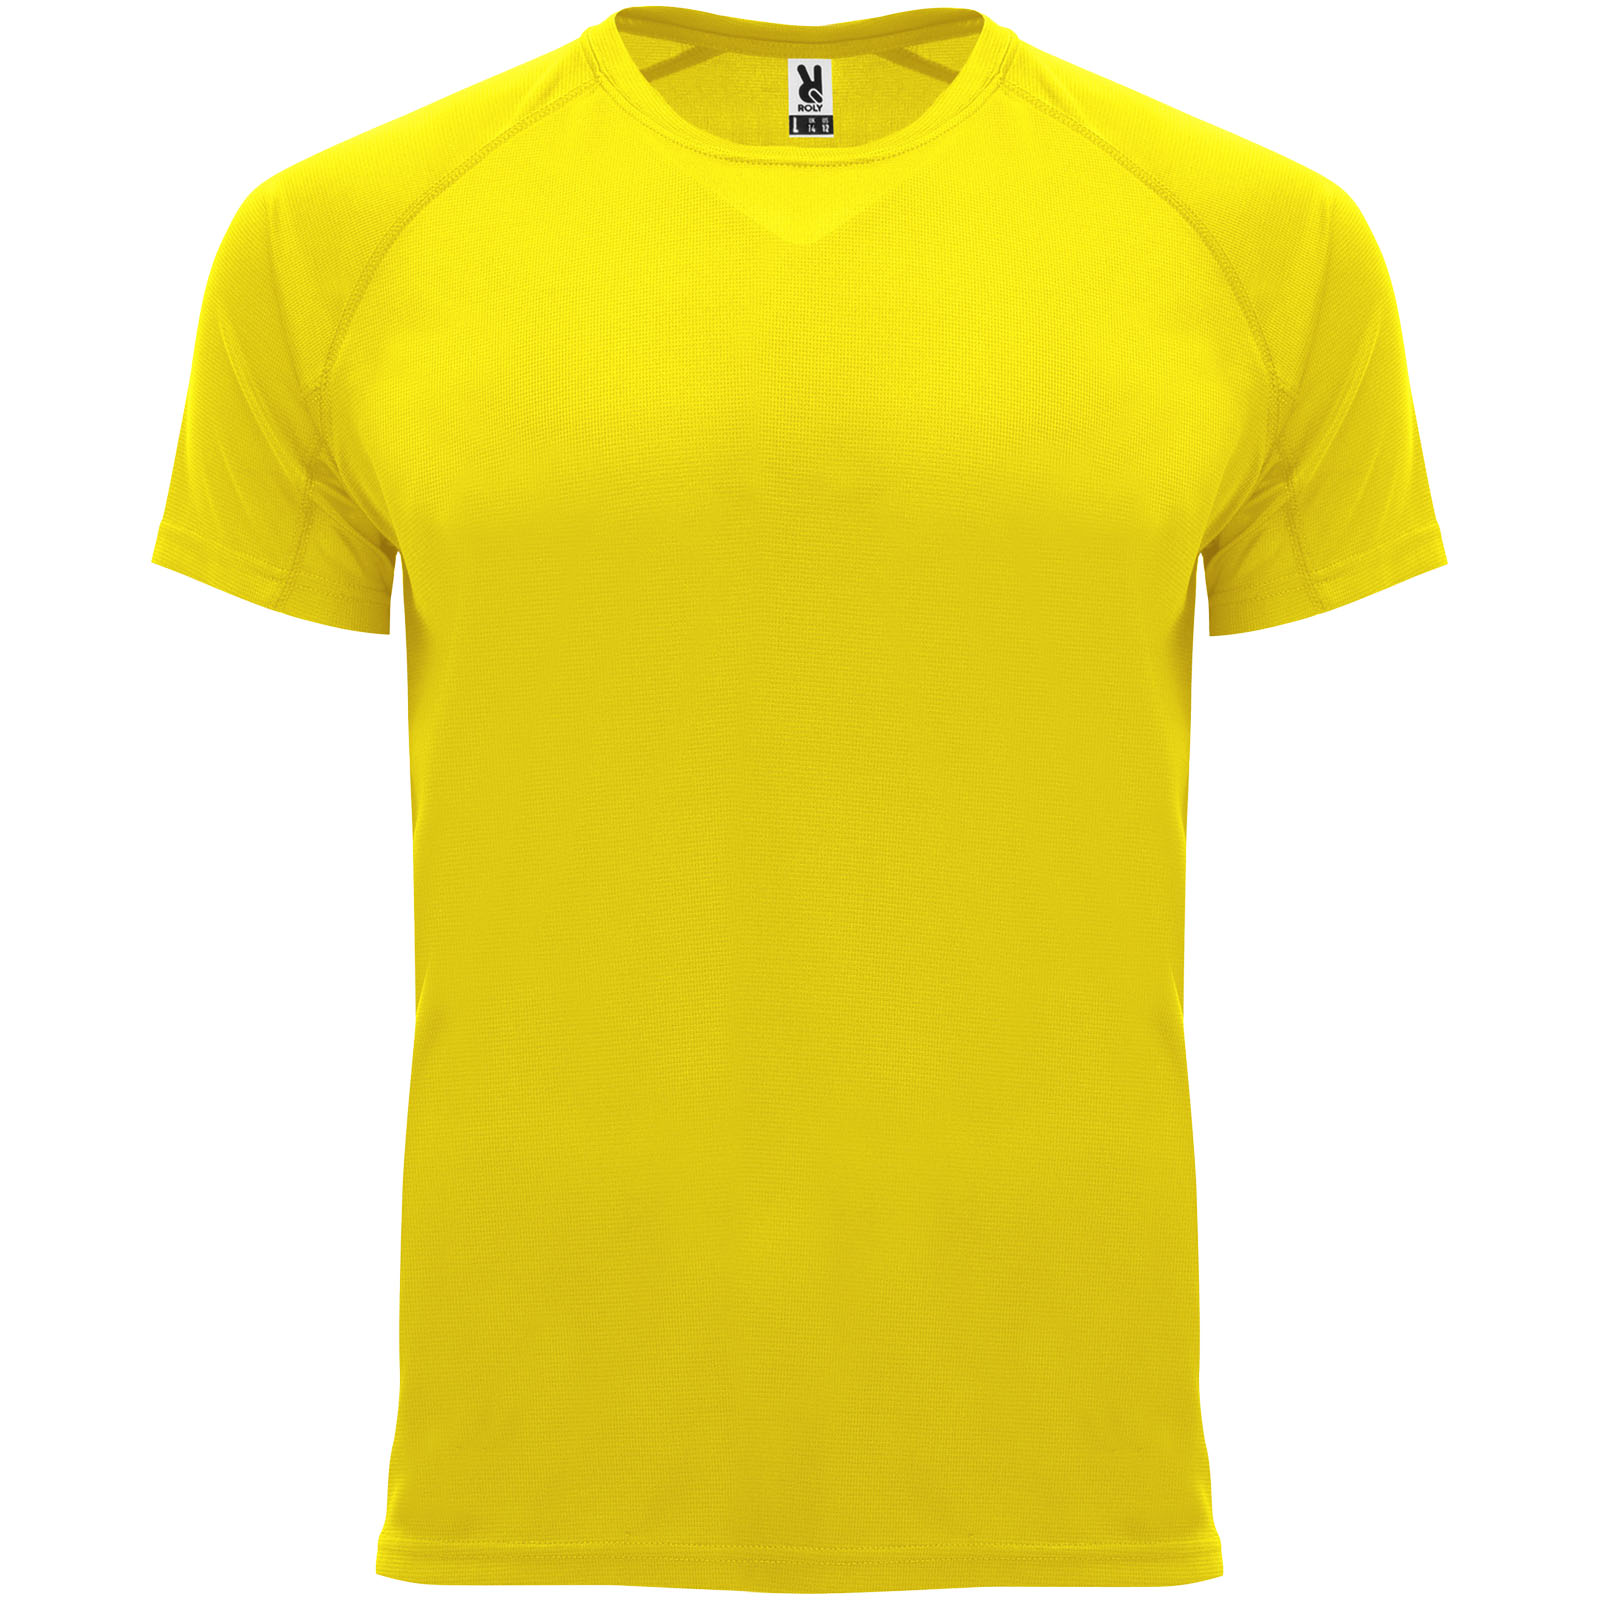 Advertising T-shirts - Bahrain short sleeve men's sports t-shirt